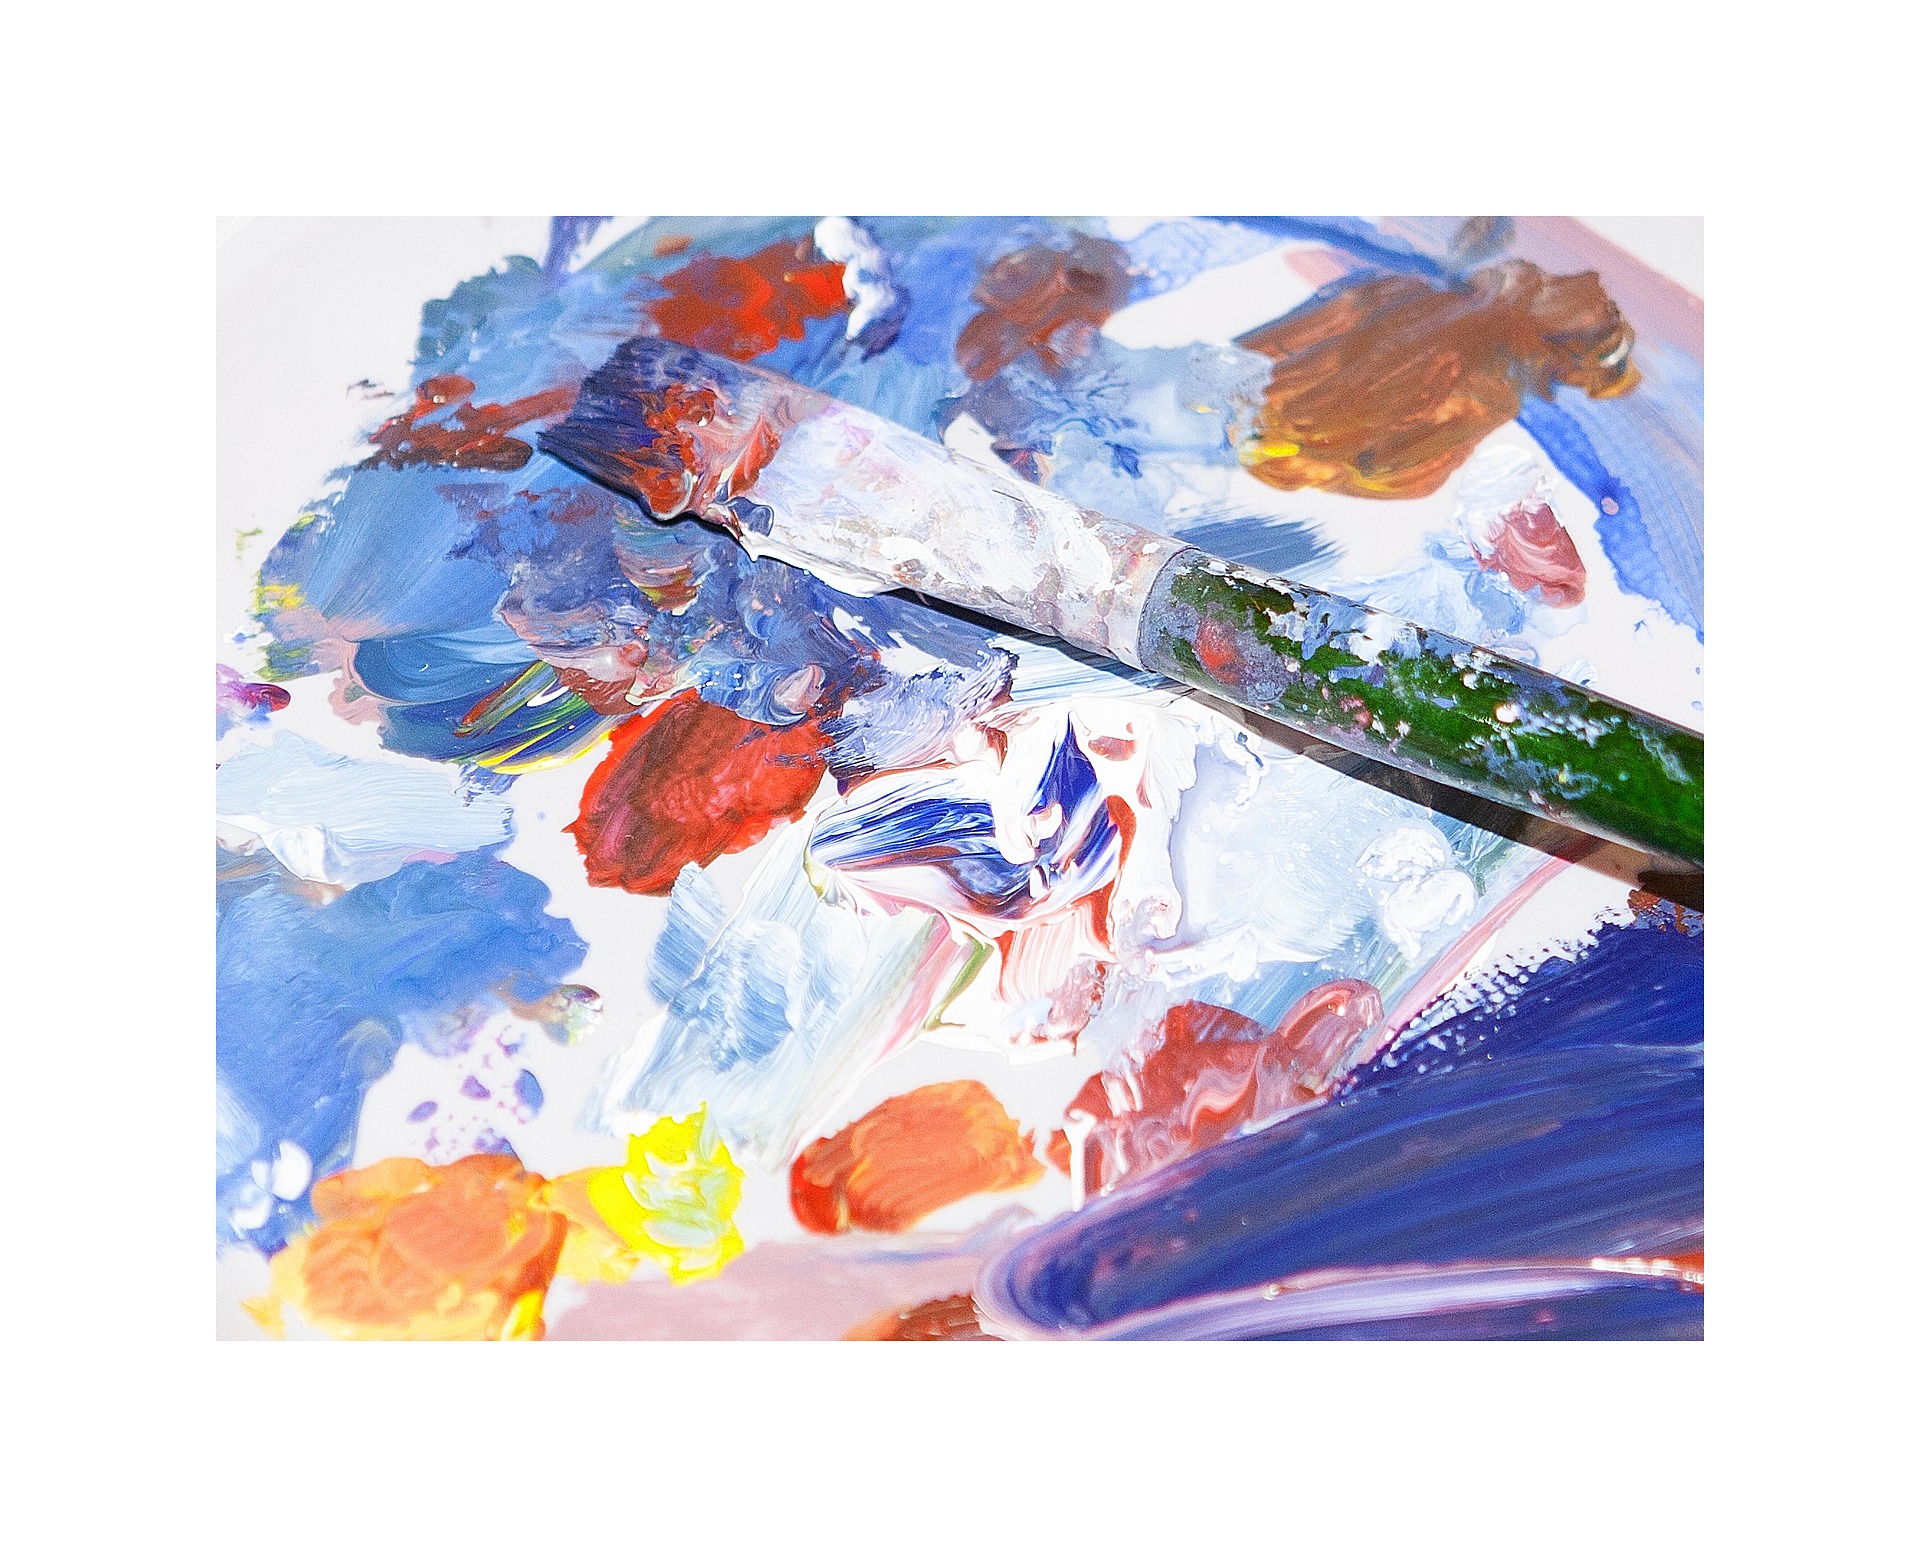 Bryan Lewis Saunders: Art “Under the Influence”